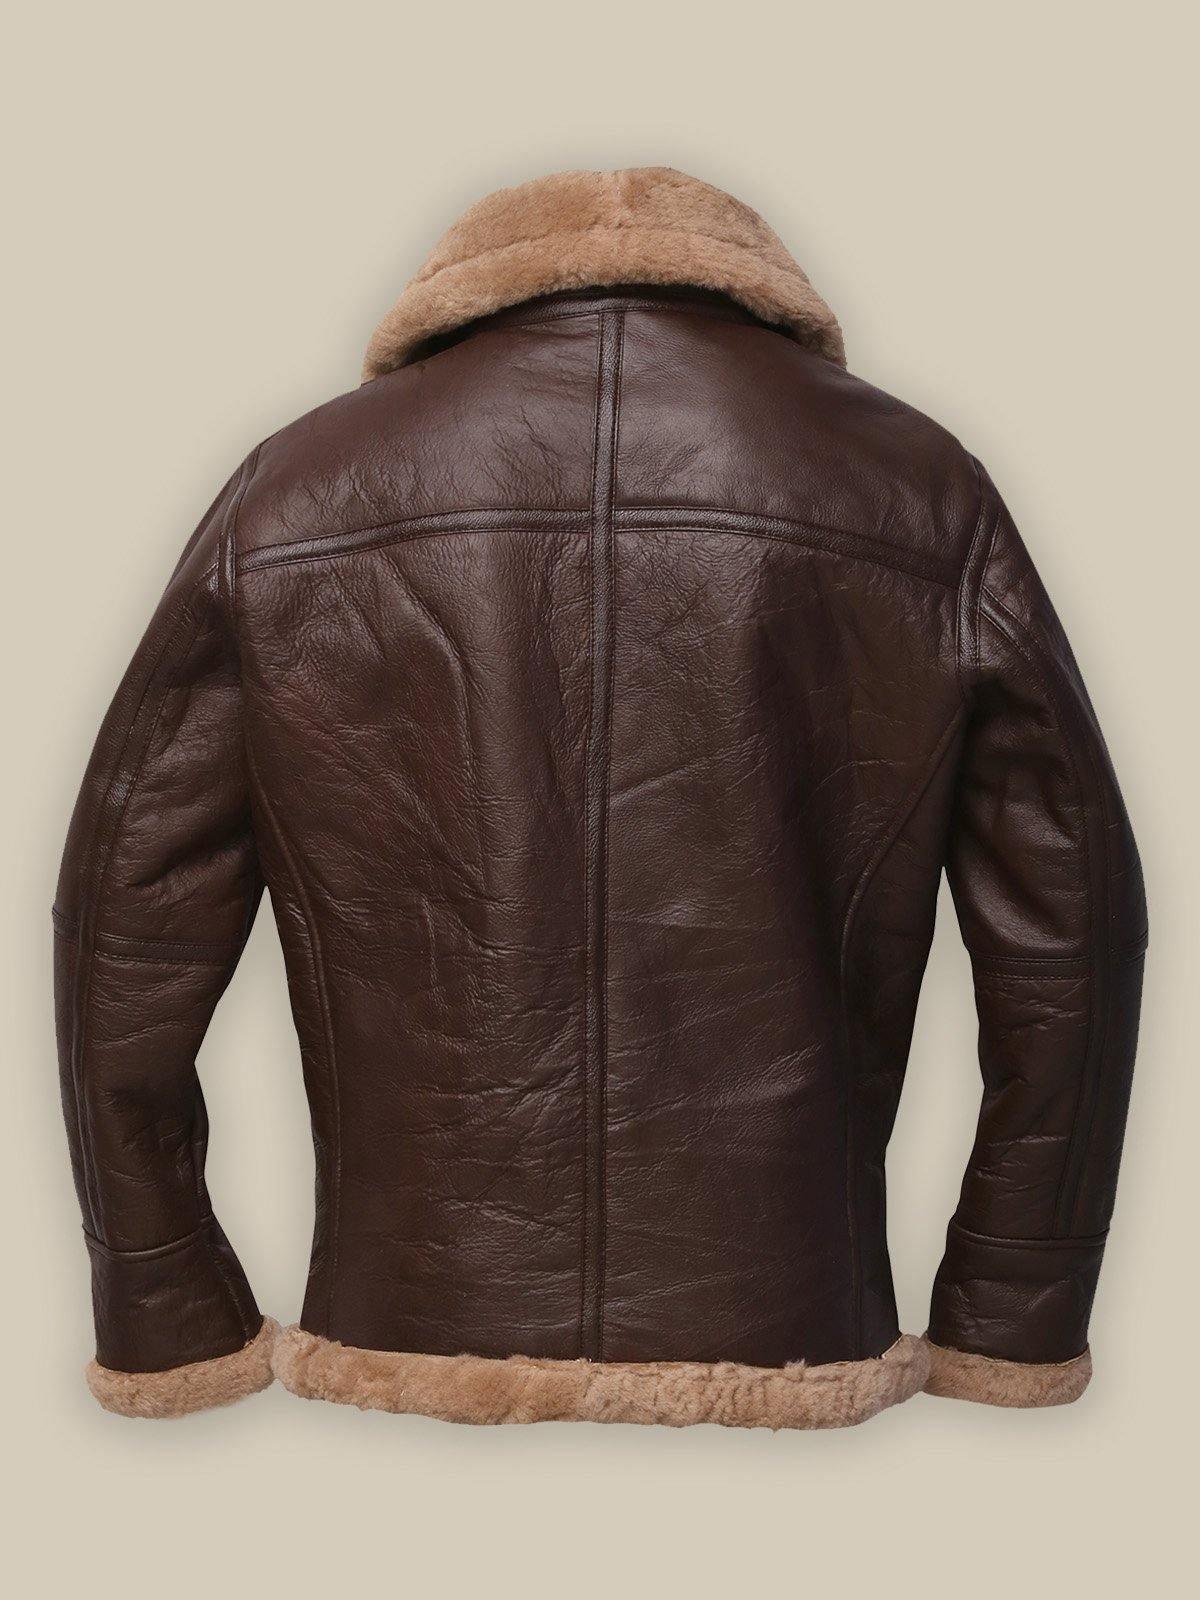 Men Brown Sheepskin Bomber Leather Jacket - Leather Loom